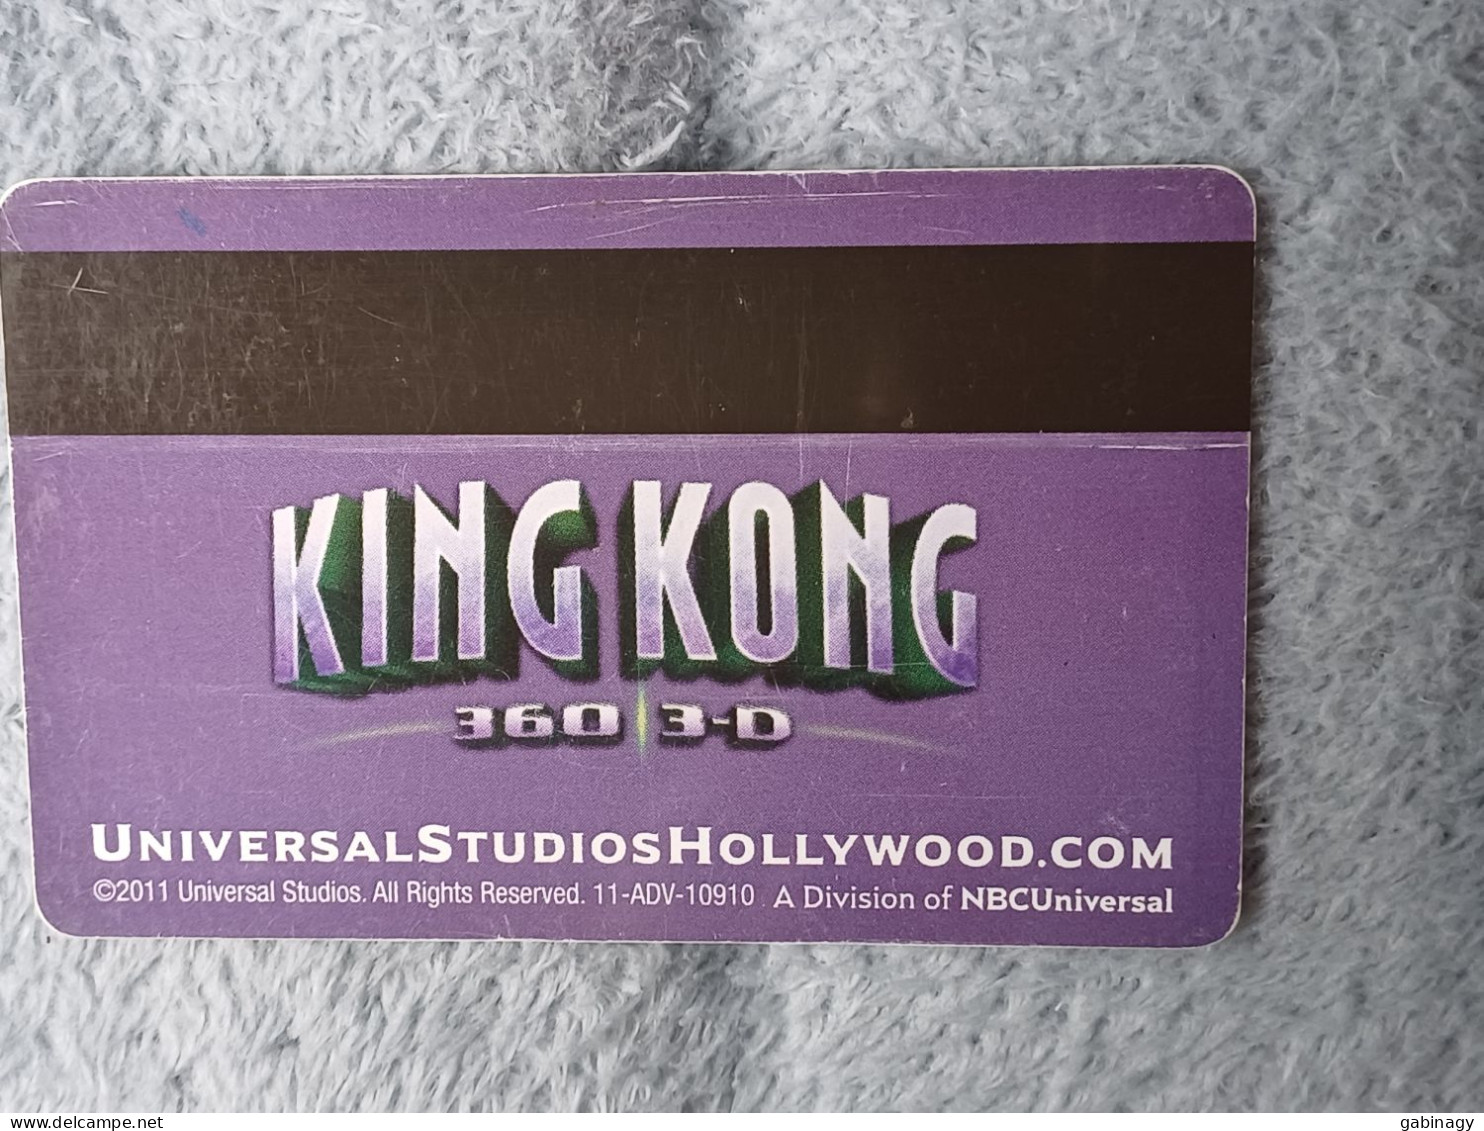 HOTEL KEYS - 2599 - USA - KING KONG UNIVERSAL STUDIOS HOLLYWOOD - Hotelsleutels (kaarten)